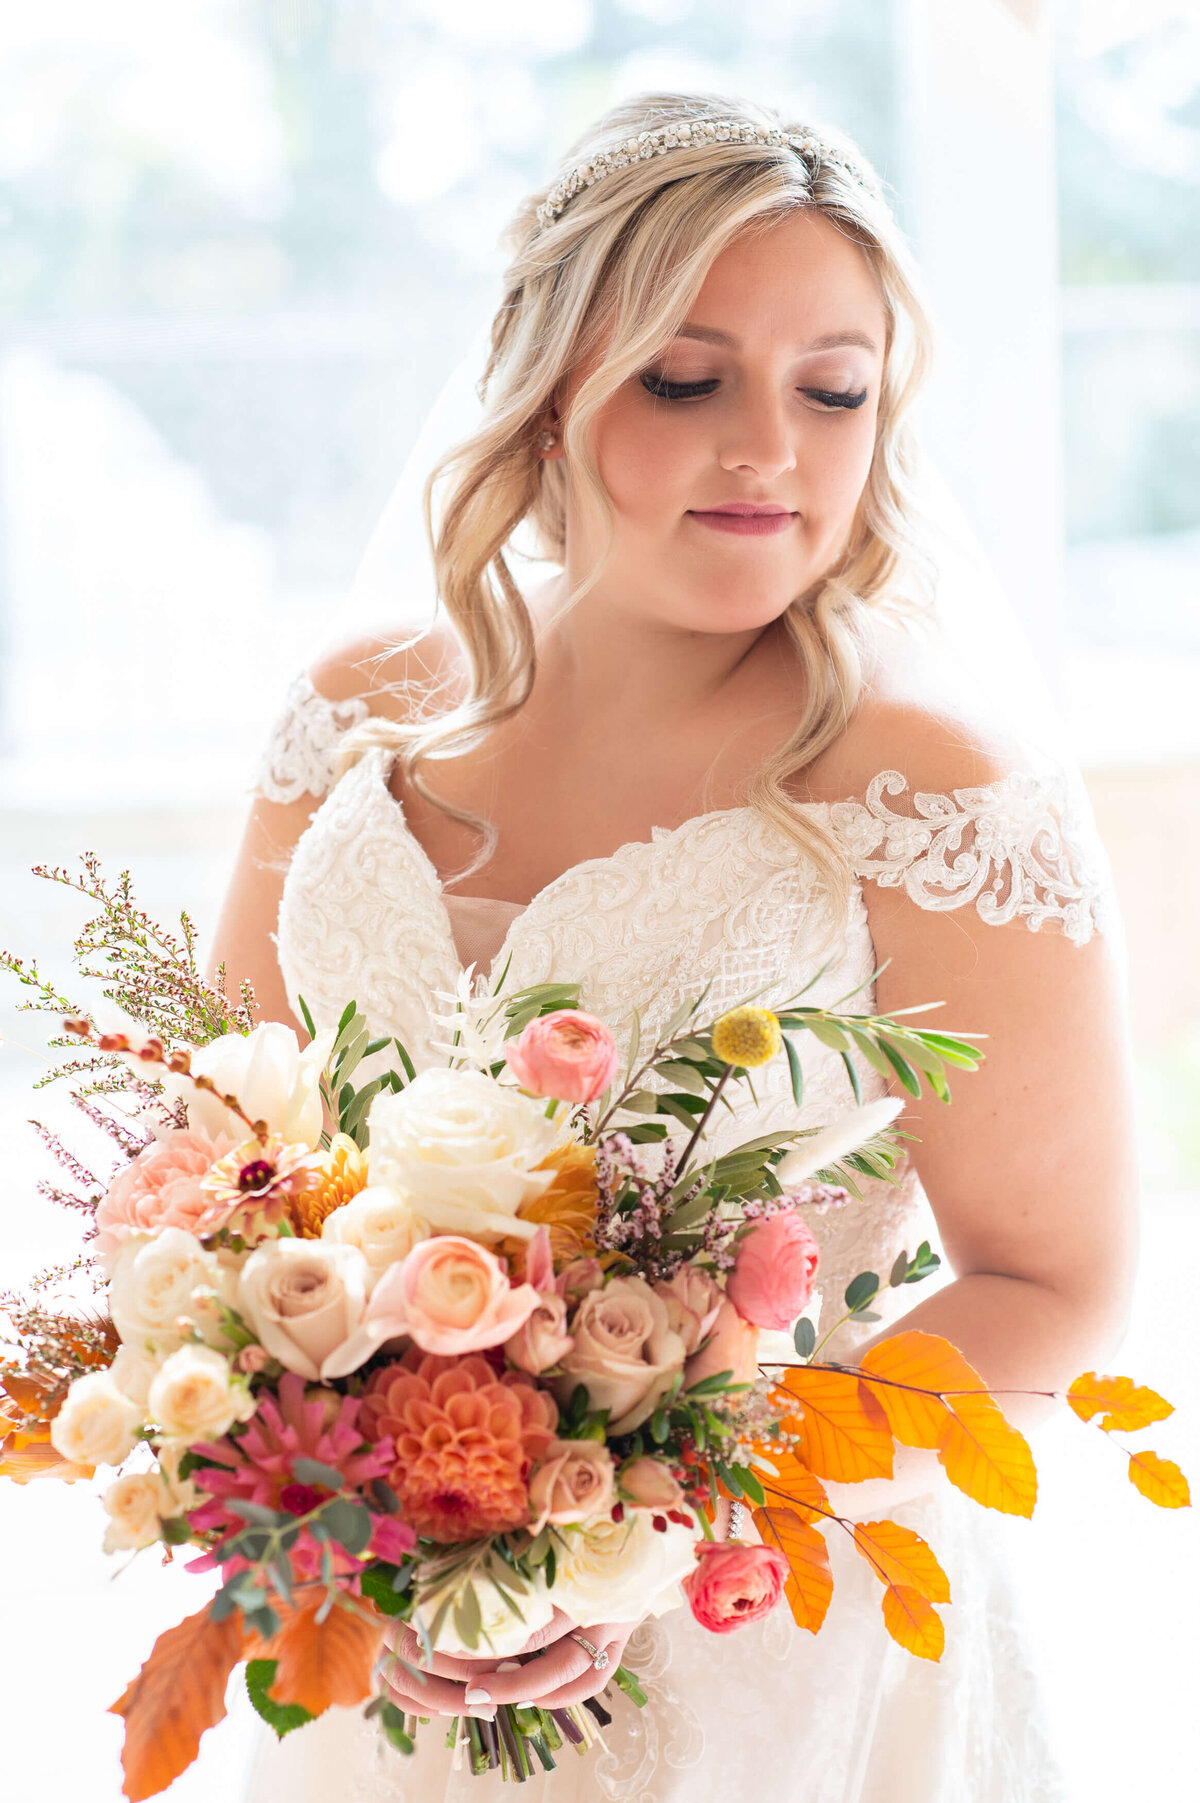 Ottawa wedding photos of a bride holding an orange bouquet taken by JEMMAN Photography